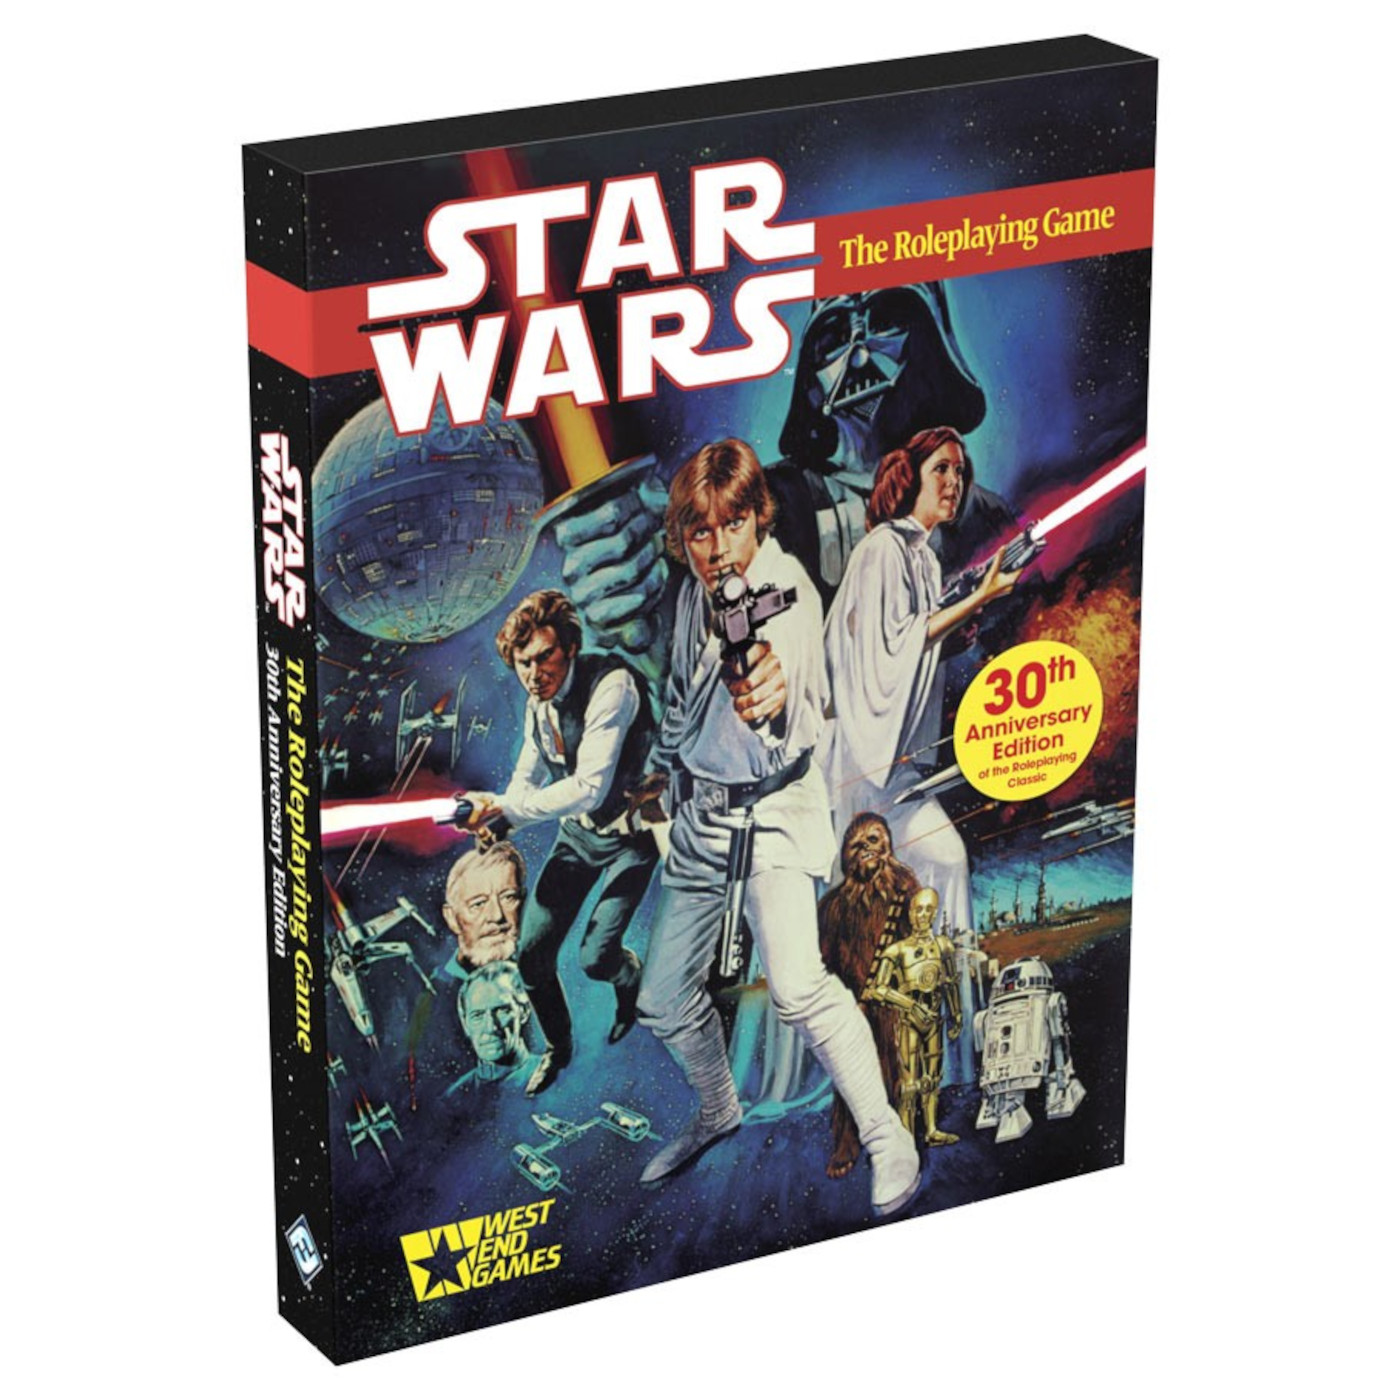 Episode 22: Star Wars 30th Anniversary Edition